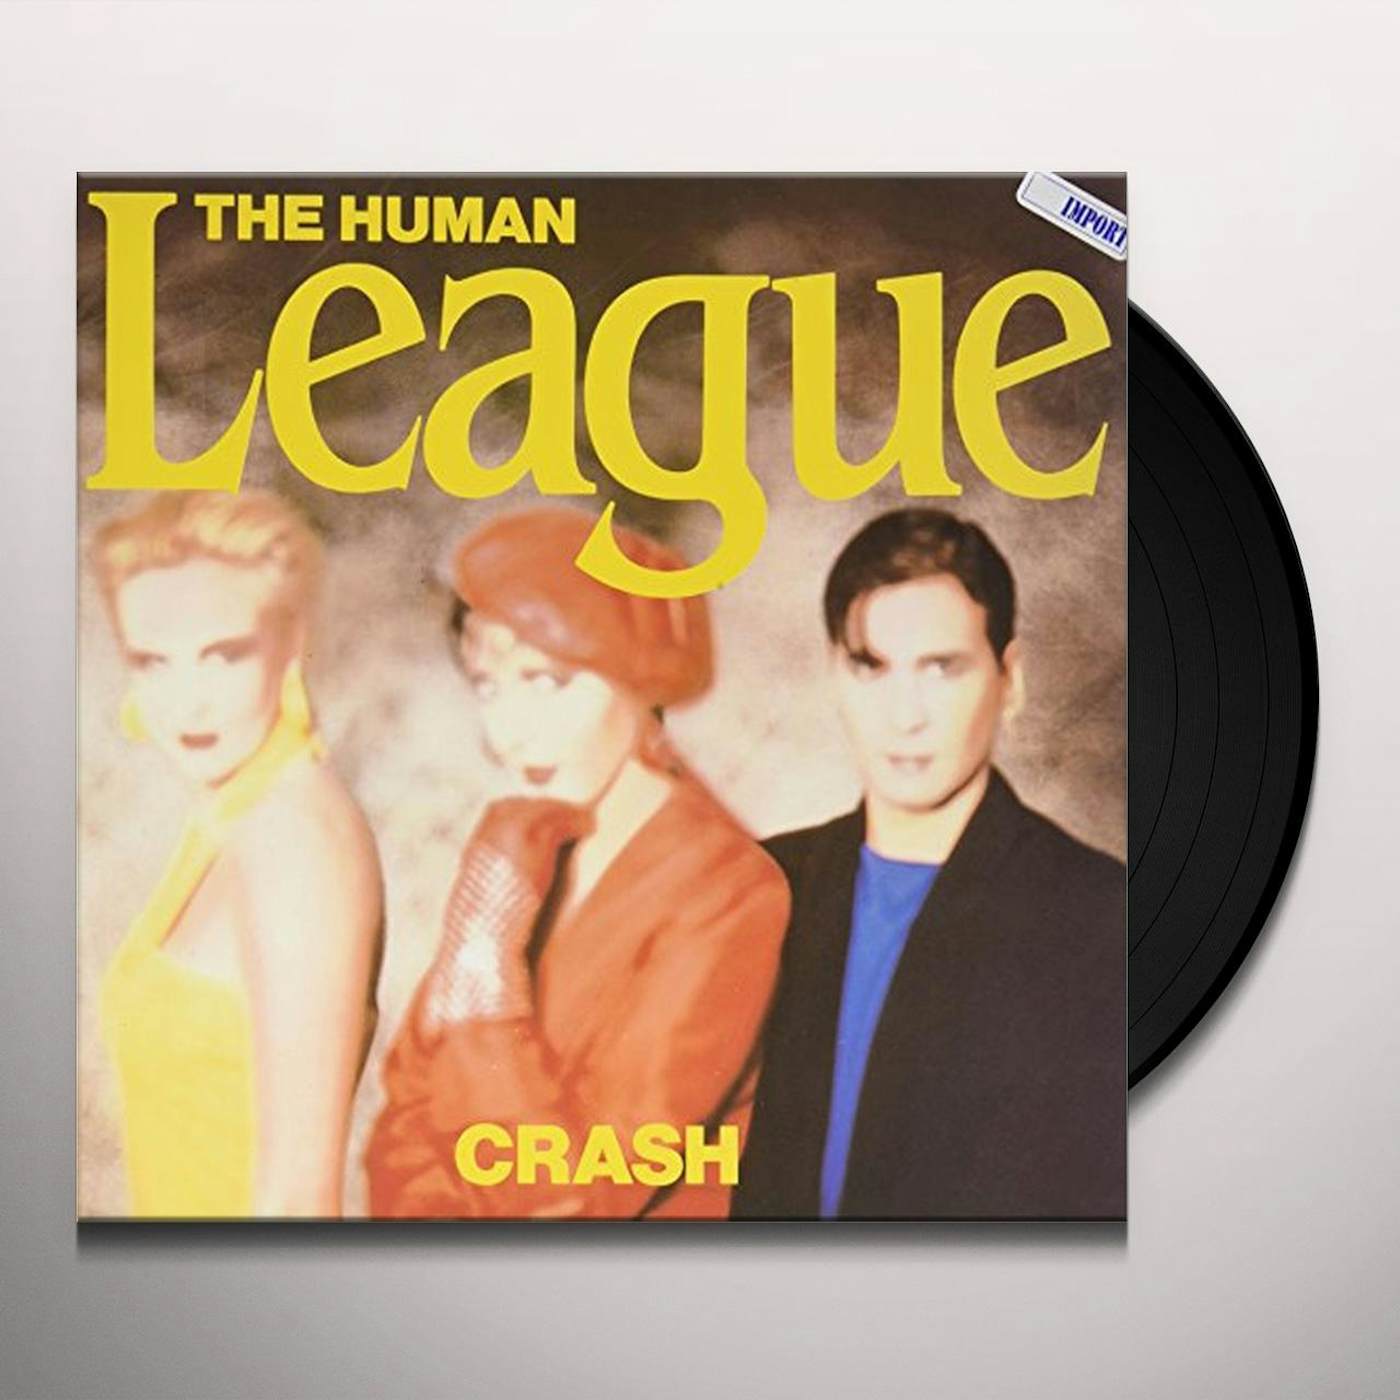 The Human League CRASH (W/ HUMAN) Vinyl Record